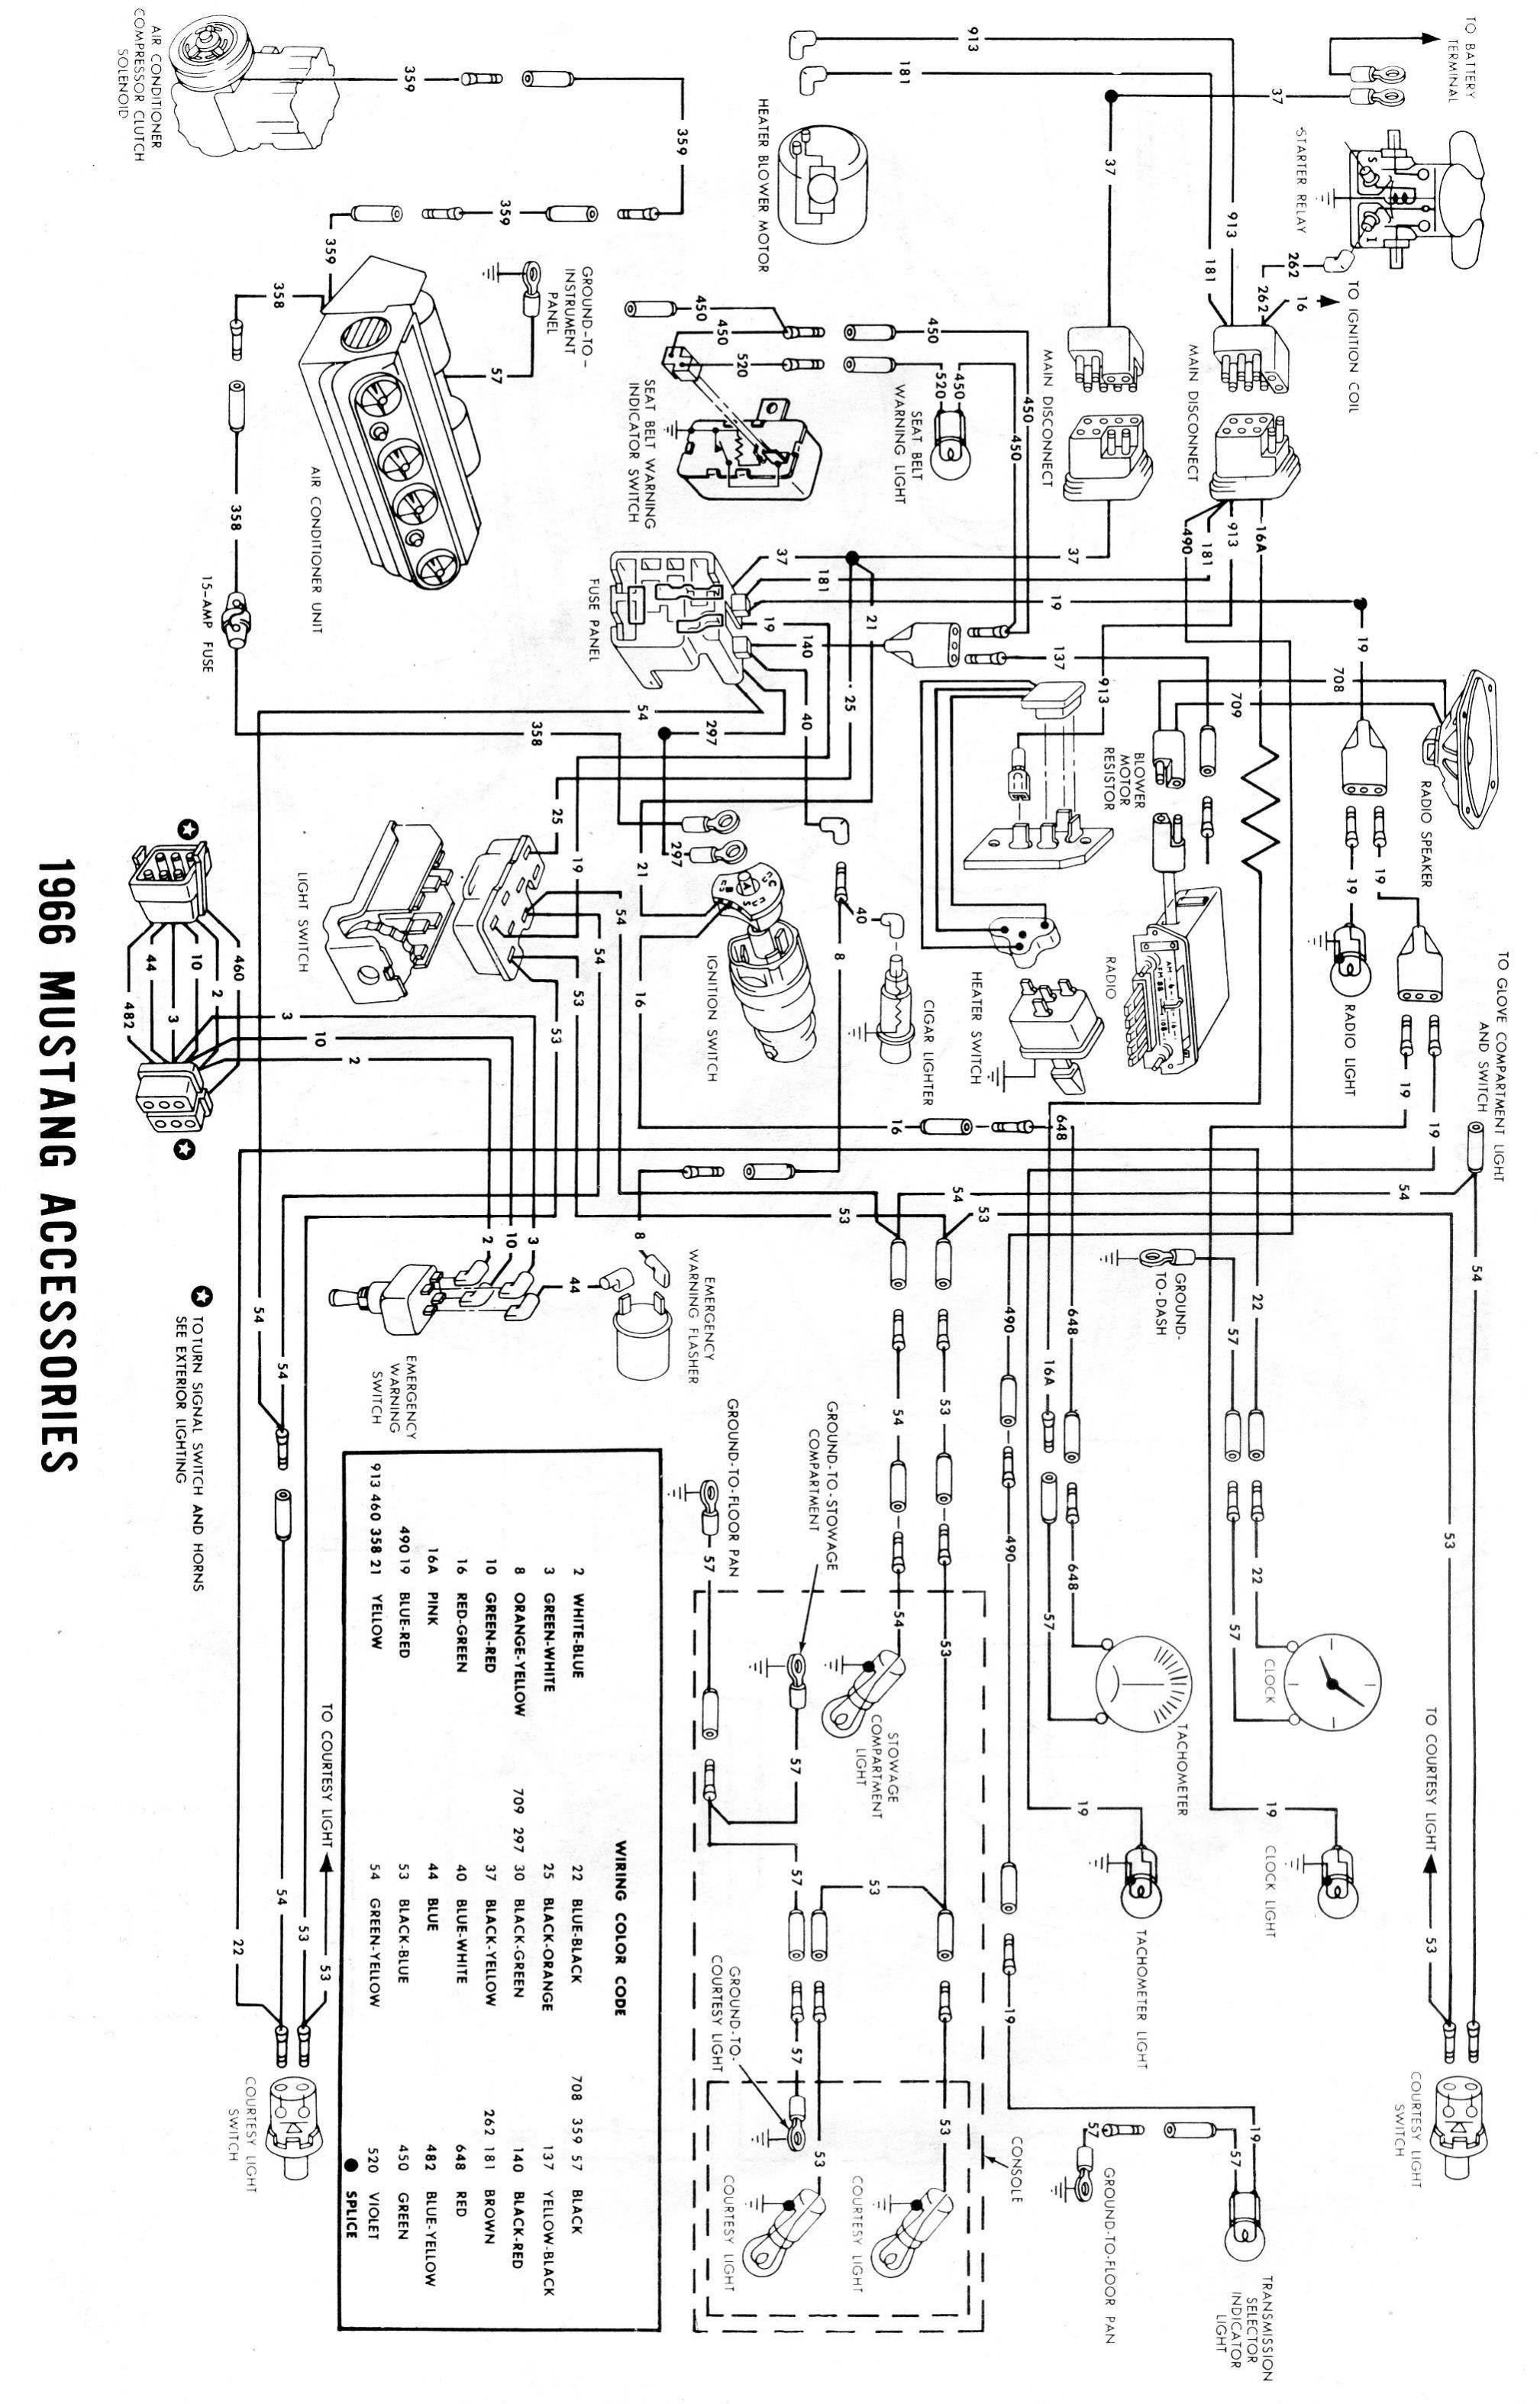 1966 Mustang Emergency Flasher Wiring Diagram - Wiring Diagram Schemas